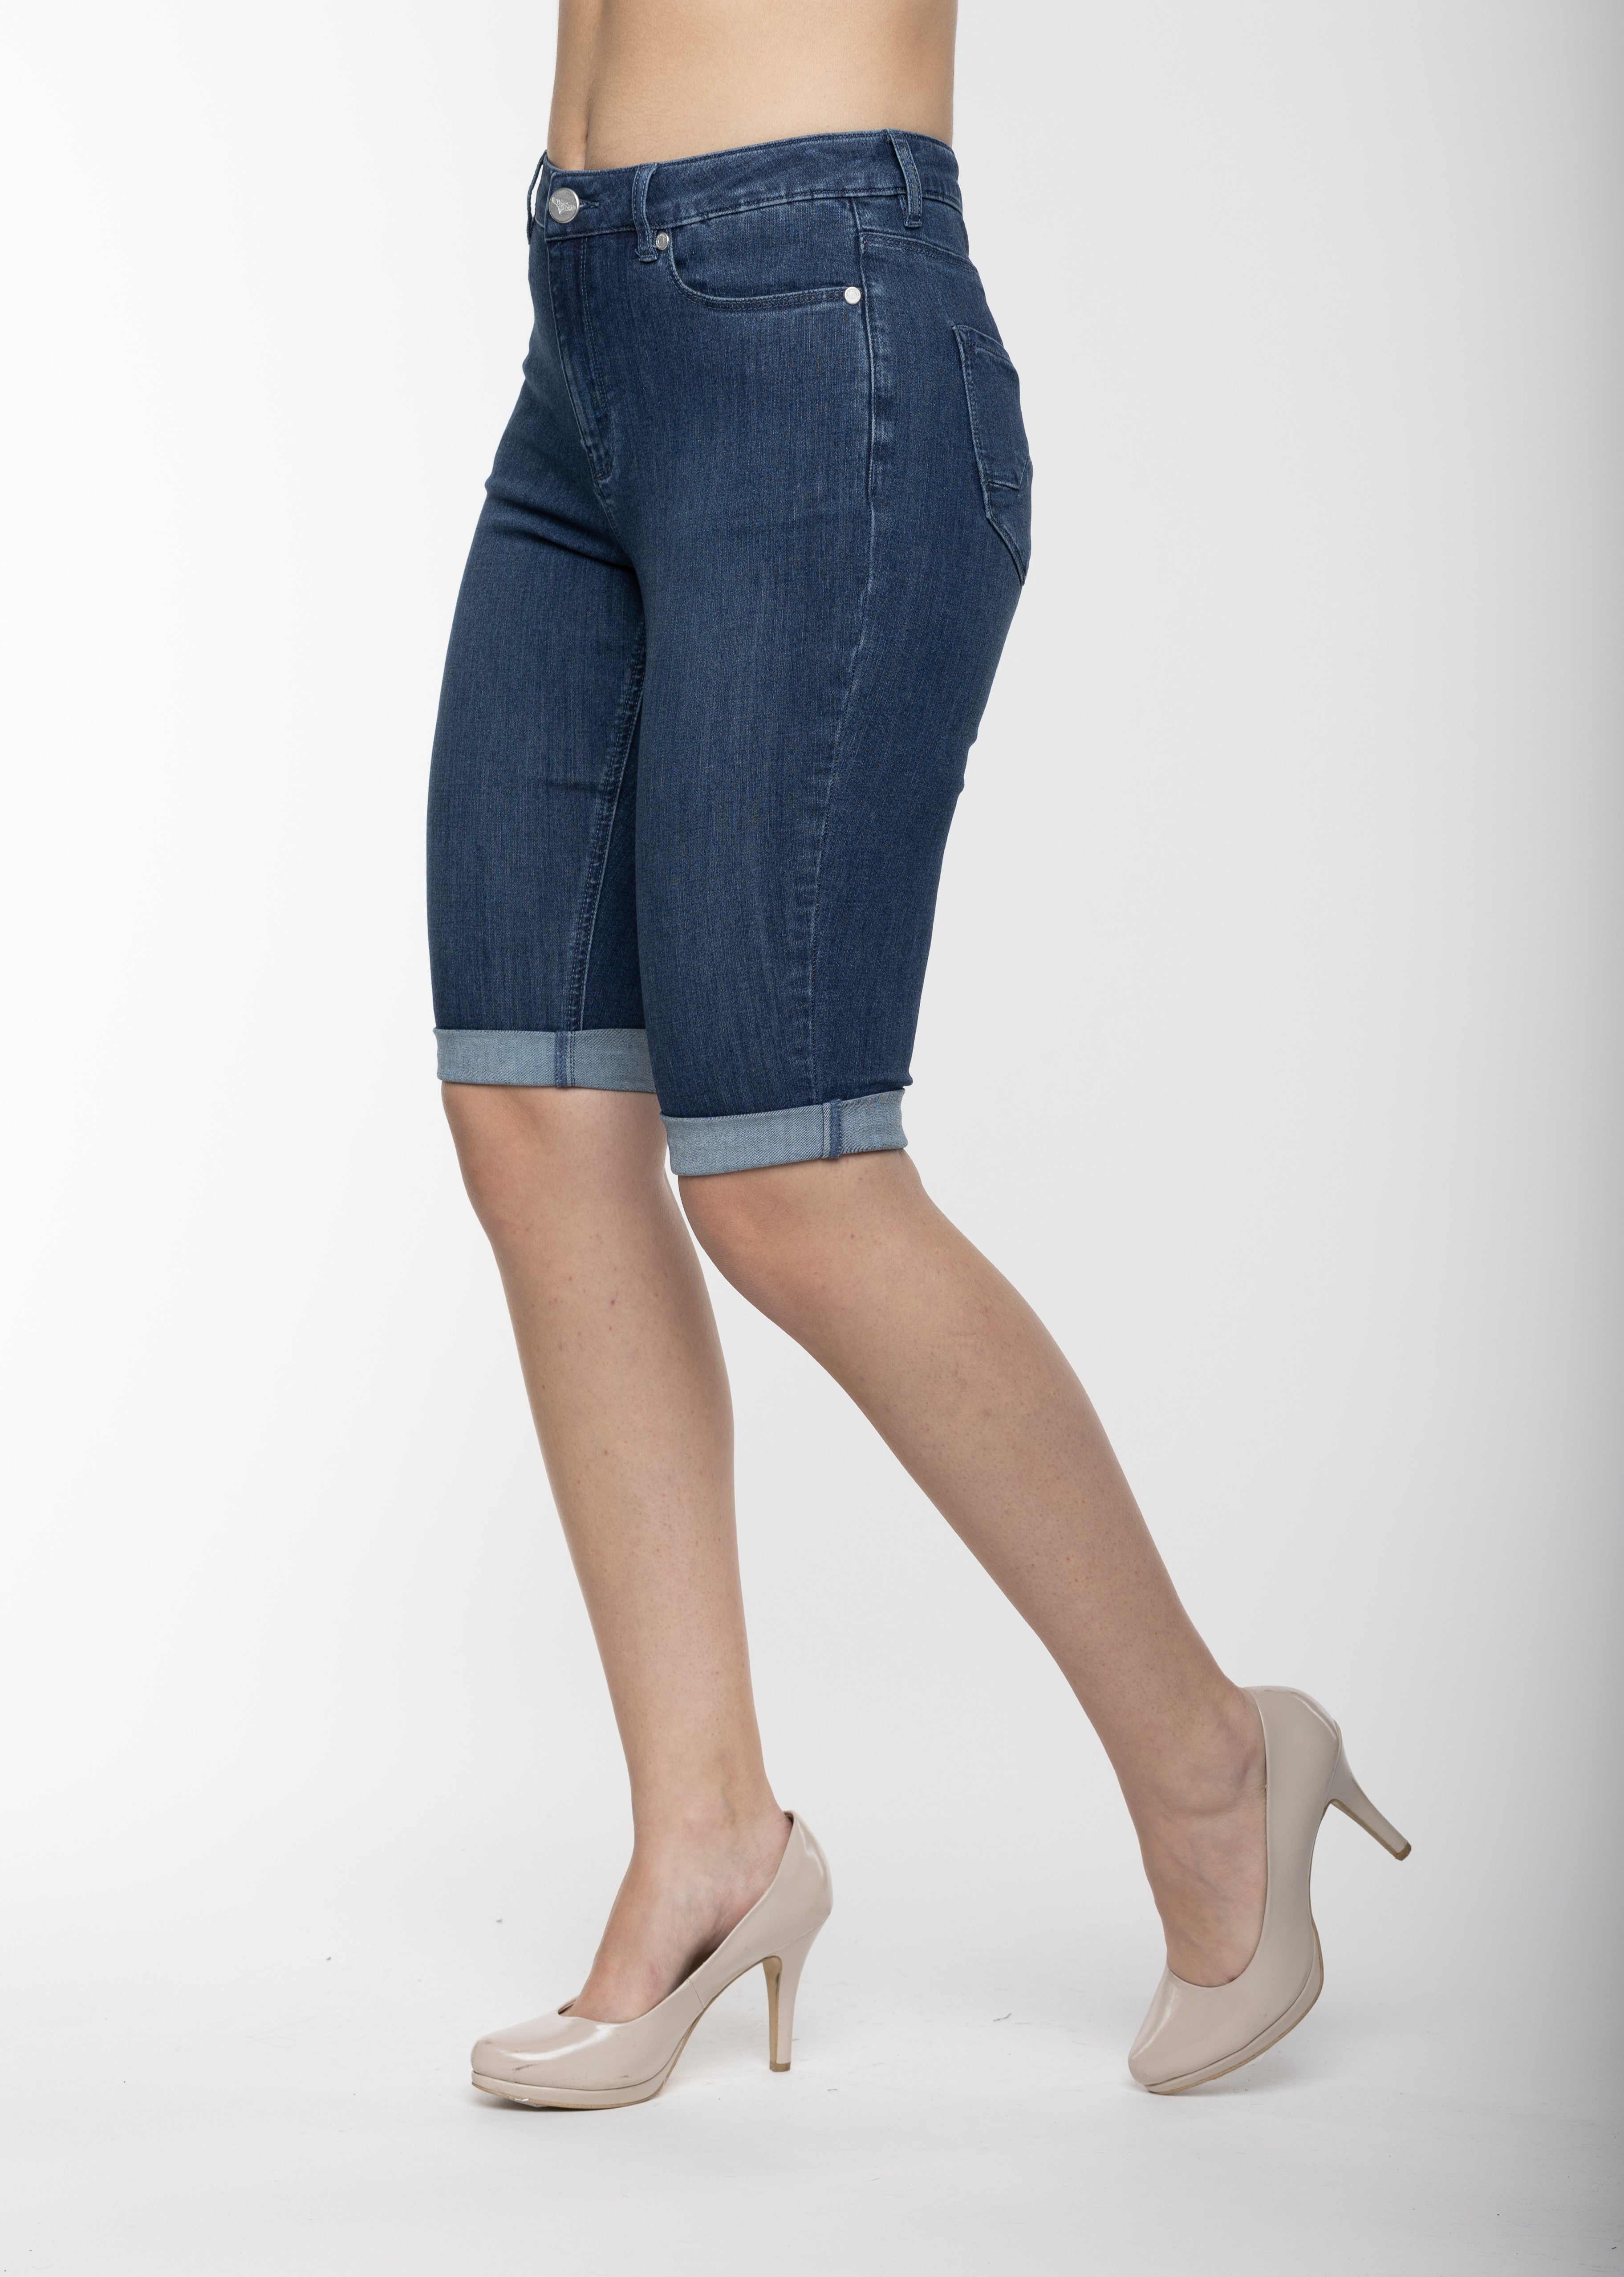 Carreli Jeans® | Premium Angela Fit 5 Pocket Bermuda in Stone Wash